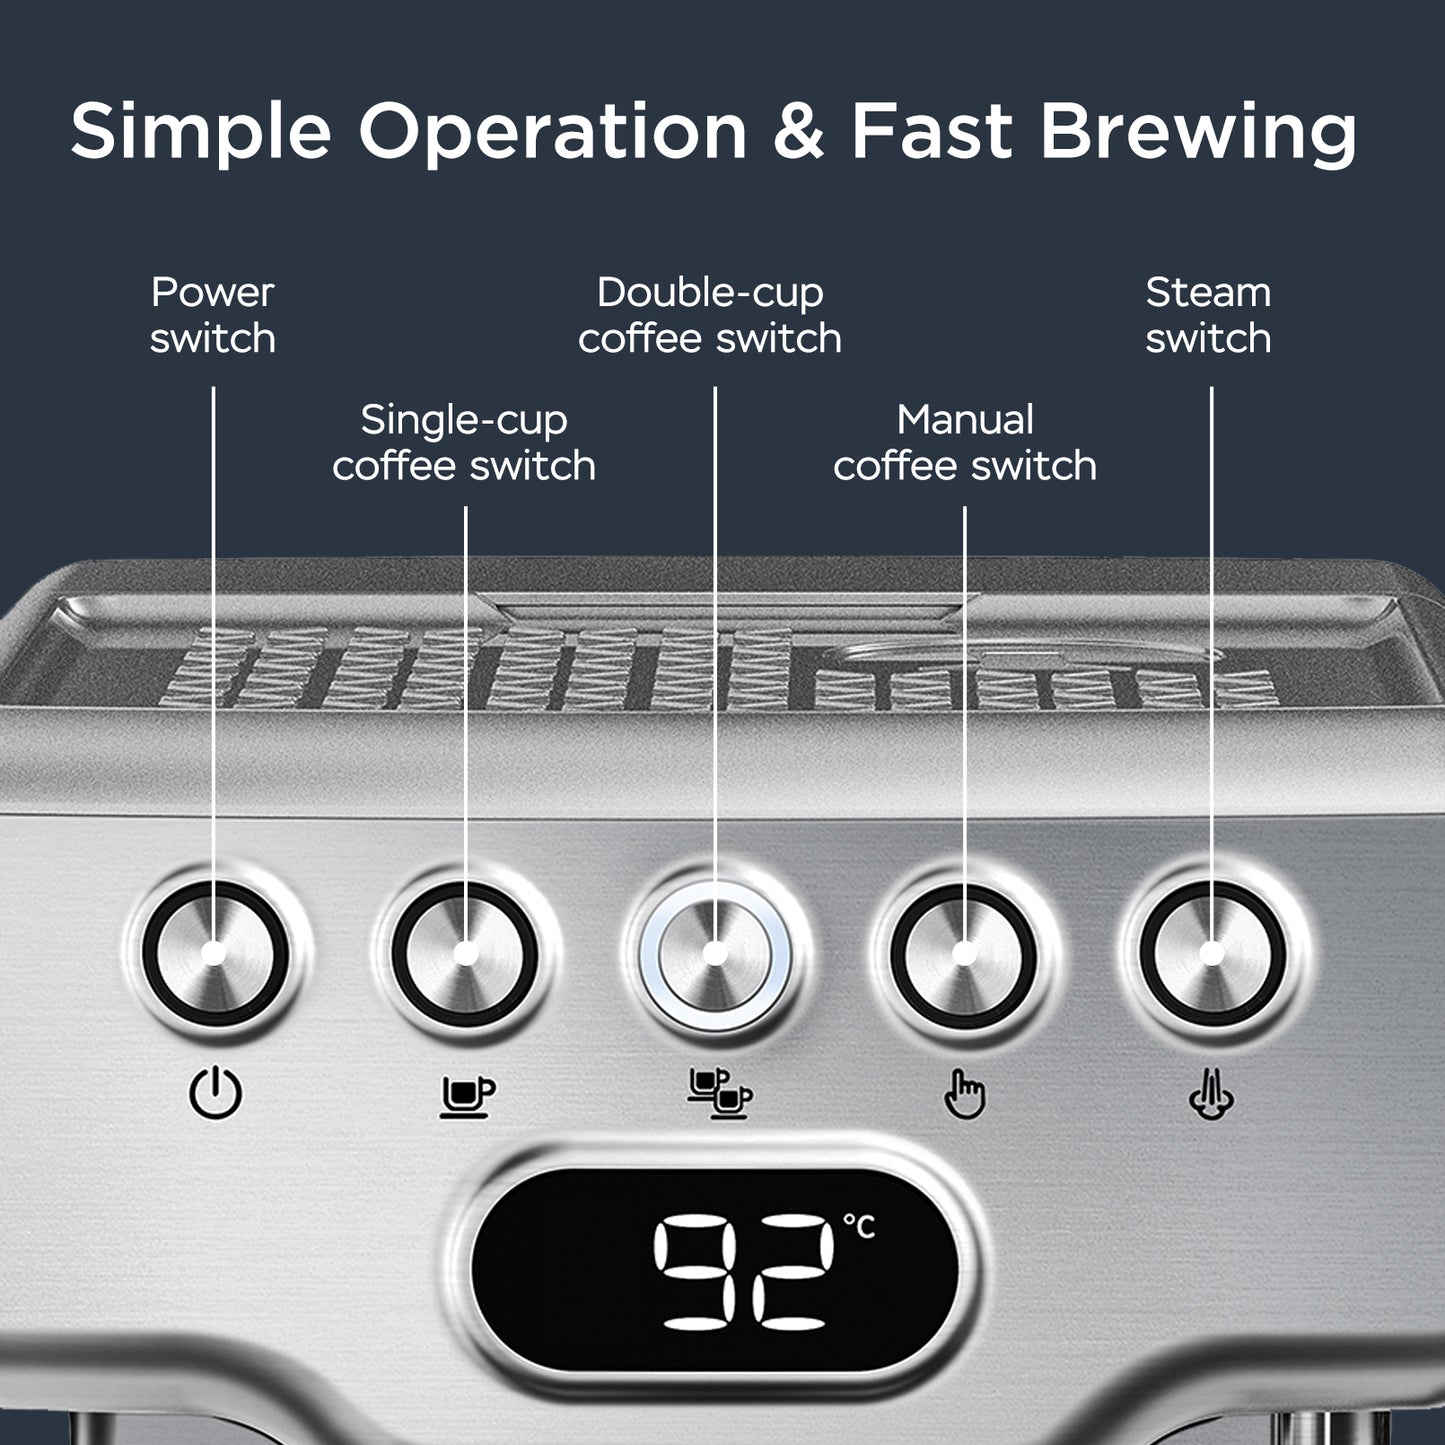 Geek Chef Espresso Machine, 20 Bar Espresso Machine With Milk Frother For Latte, Cappuccino, Macchiato, For Home Espresso Maker, 1.8L Water Tank, Stainless Steel*